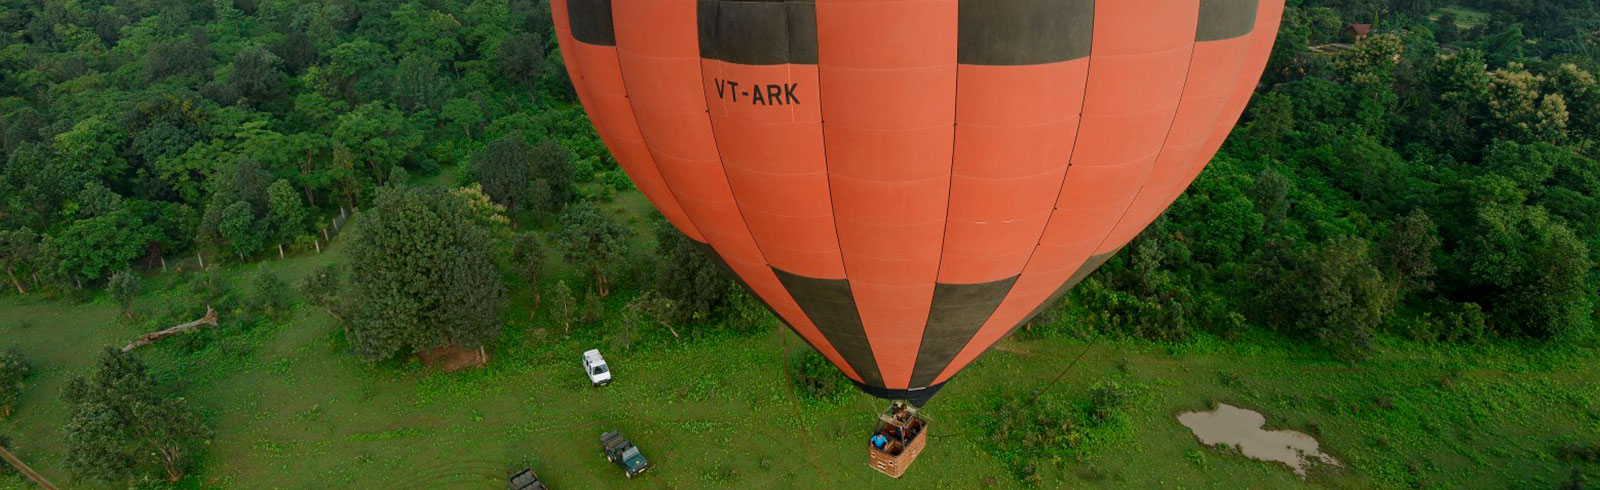 Hot Air Ballooning in India